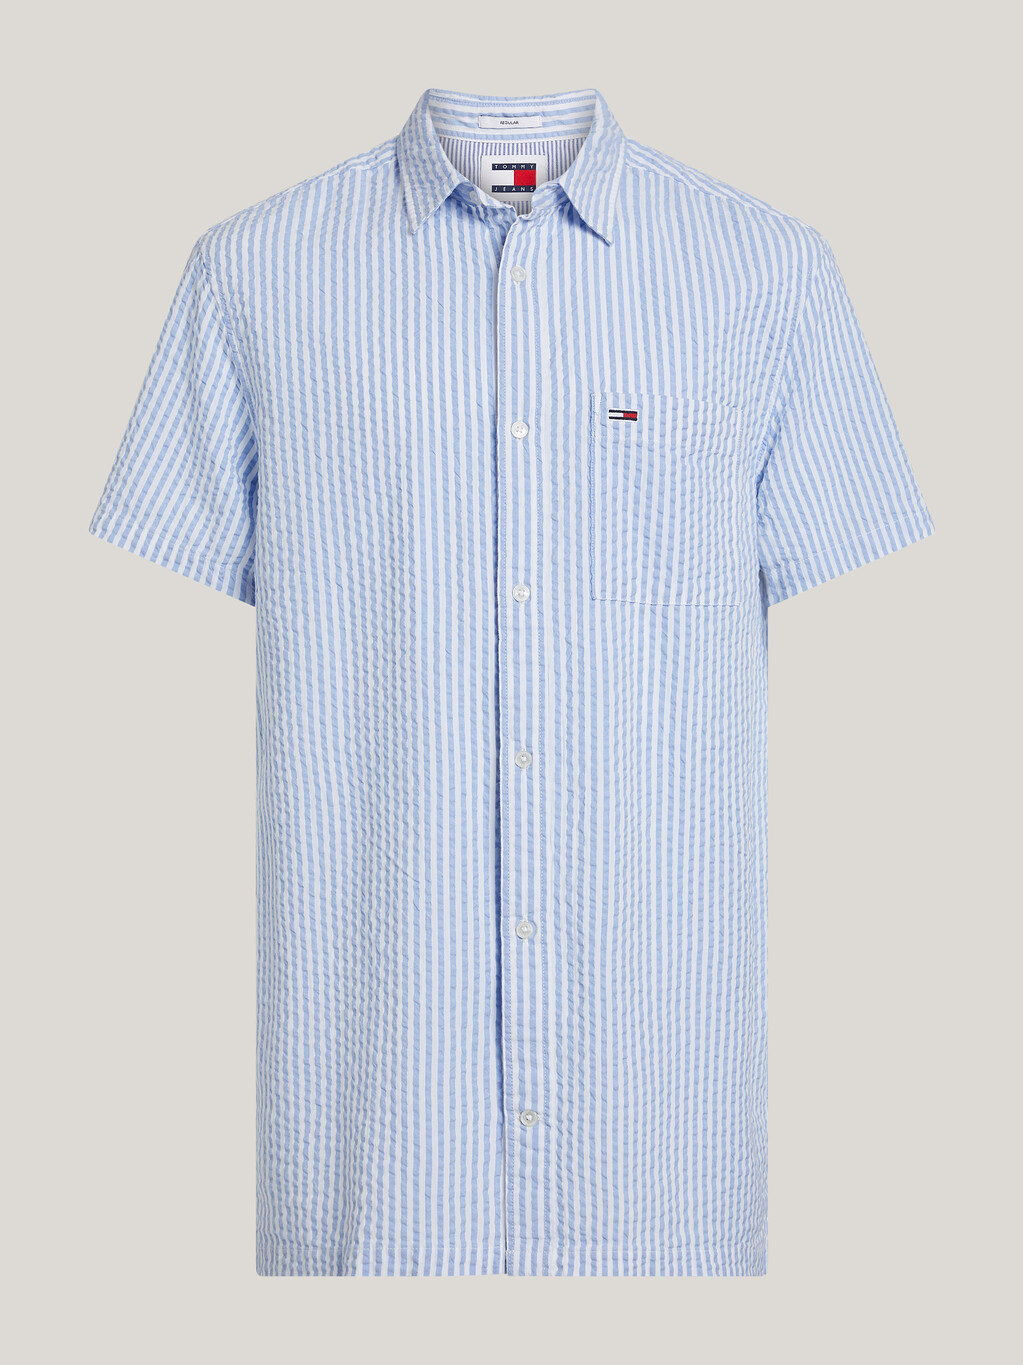 Stripe Seersucker Short Sleeve Shirt, White / Moderate Blue, hi-res